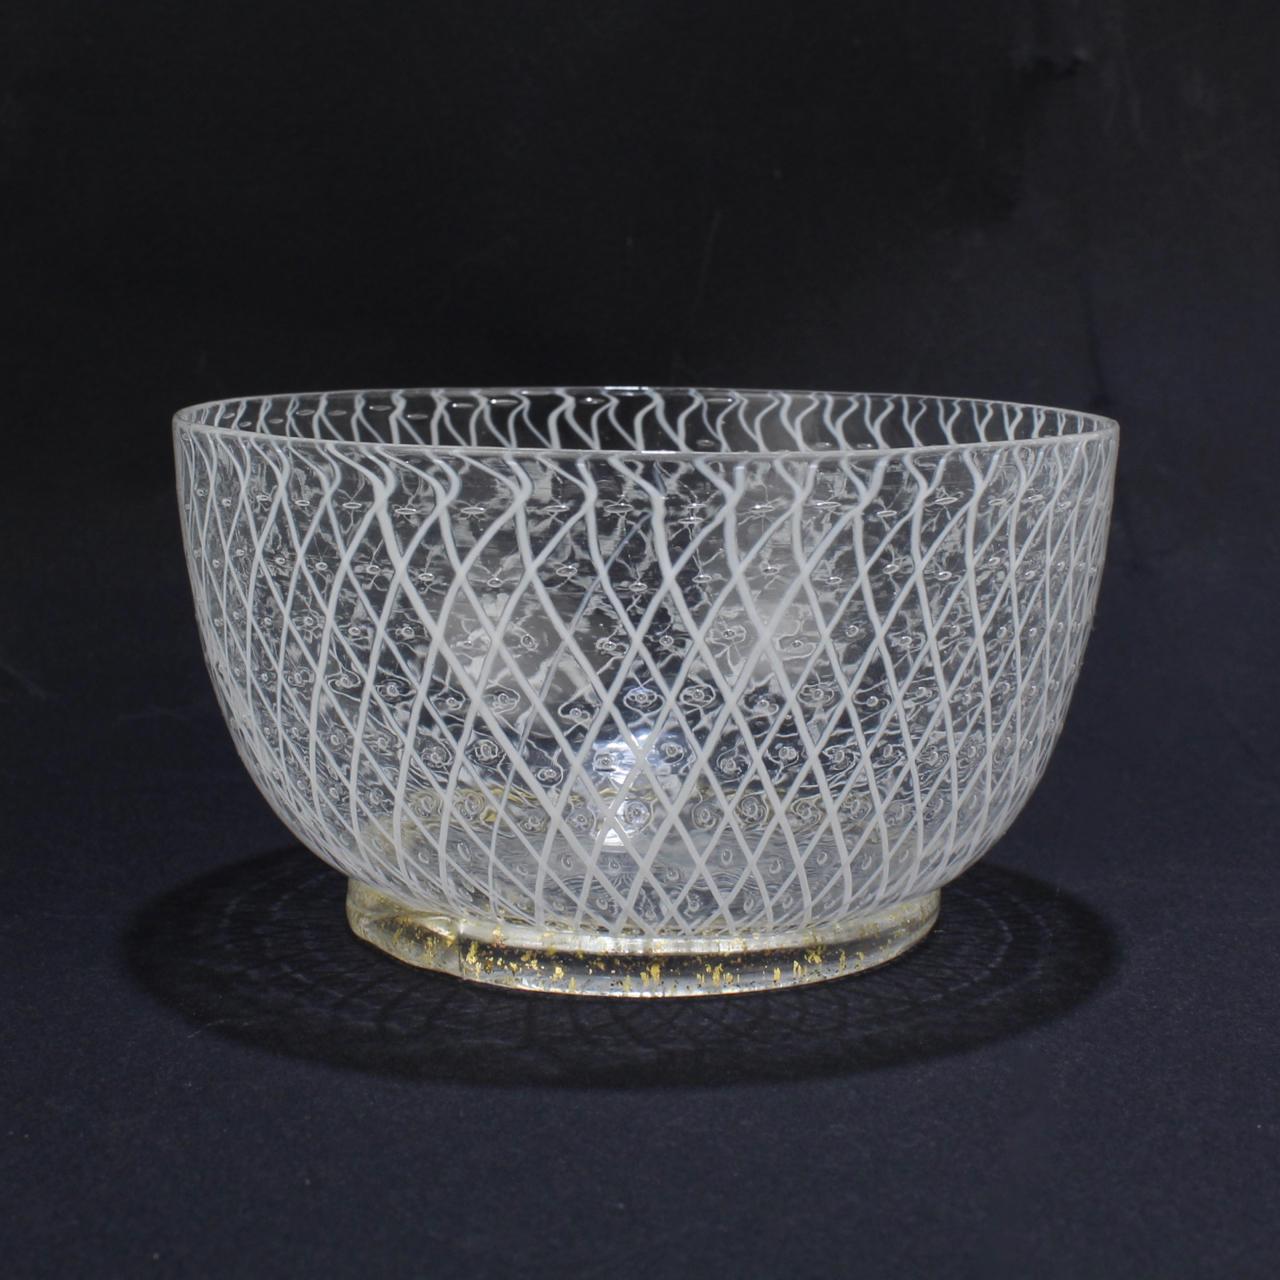 Set of 10 Venetian or Murano Glass Reticulo Filigrana Bowls and Plates 3